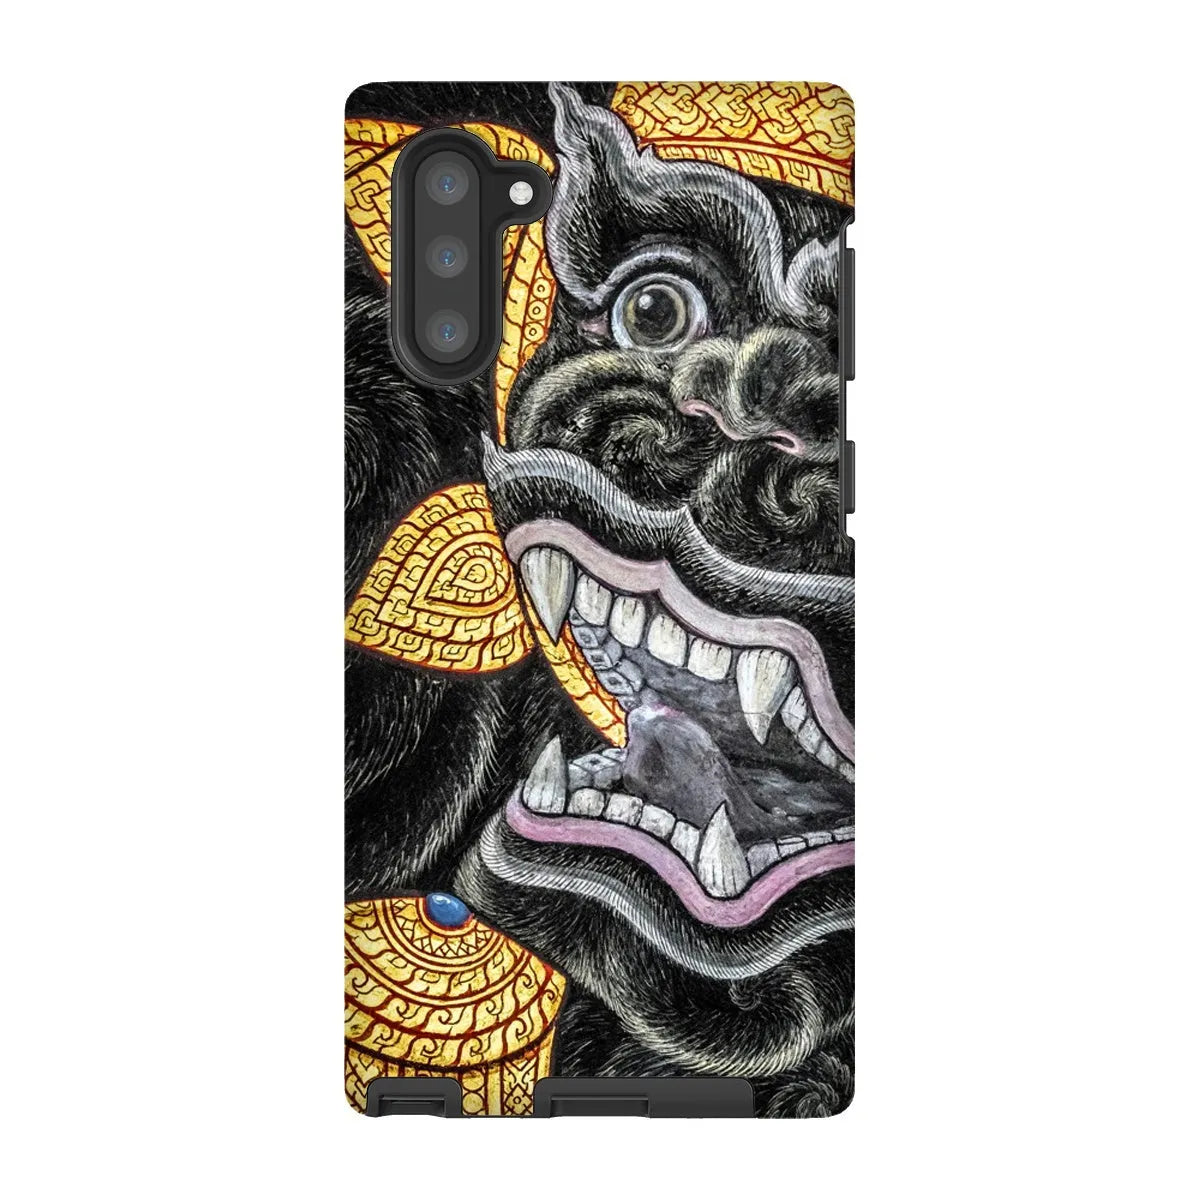 Monkey Magic - Thai Aesthetic Animal Art Phone Case - Samsung Galaxy Note 10 / Matte - Mobile Phone Cases - Aesthetic